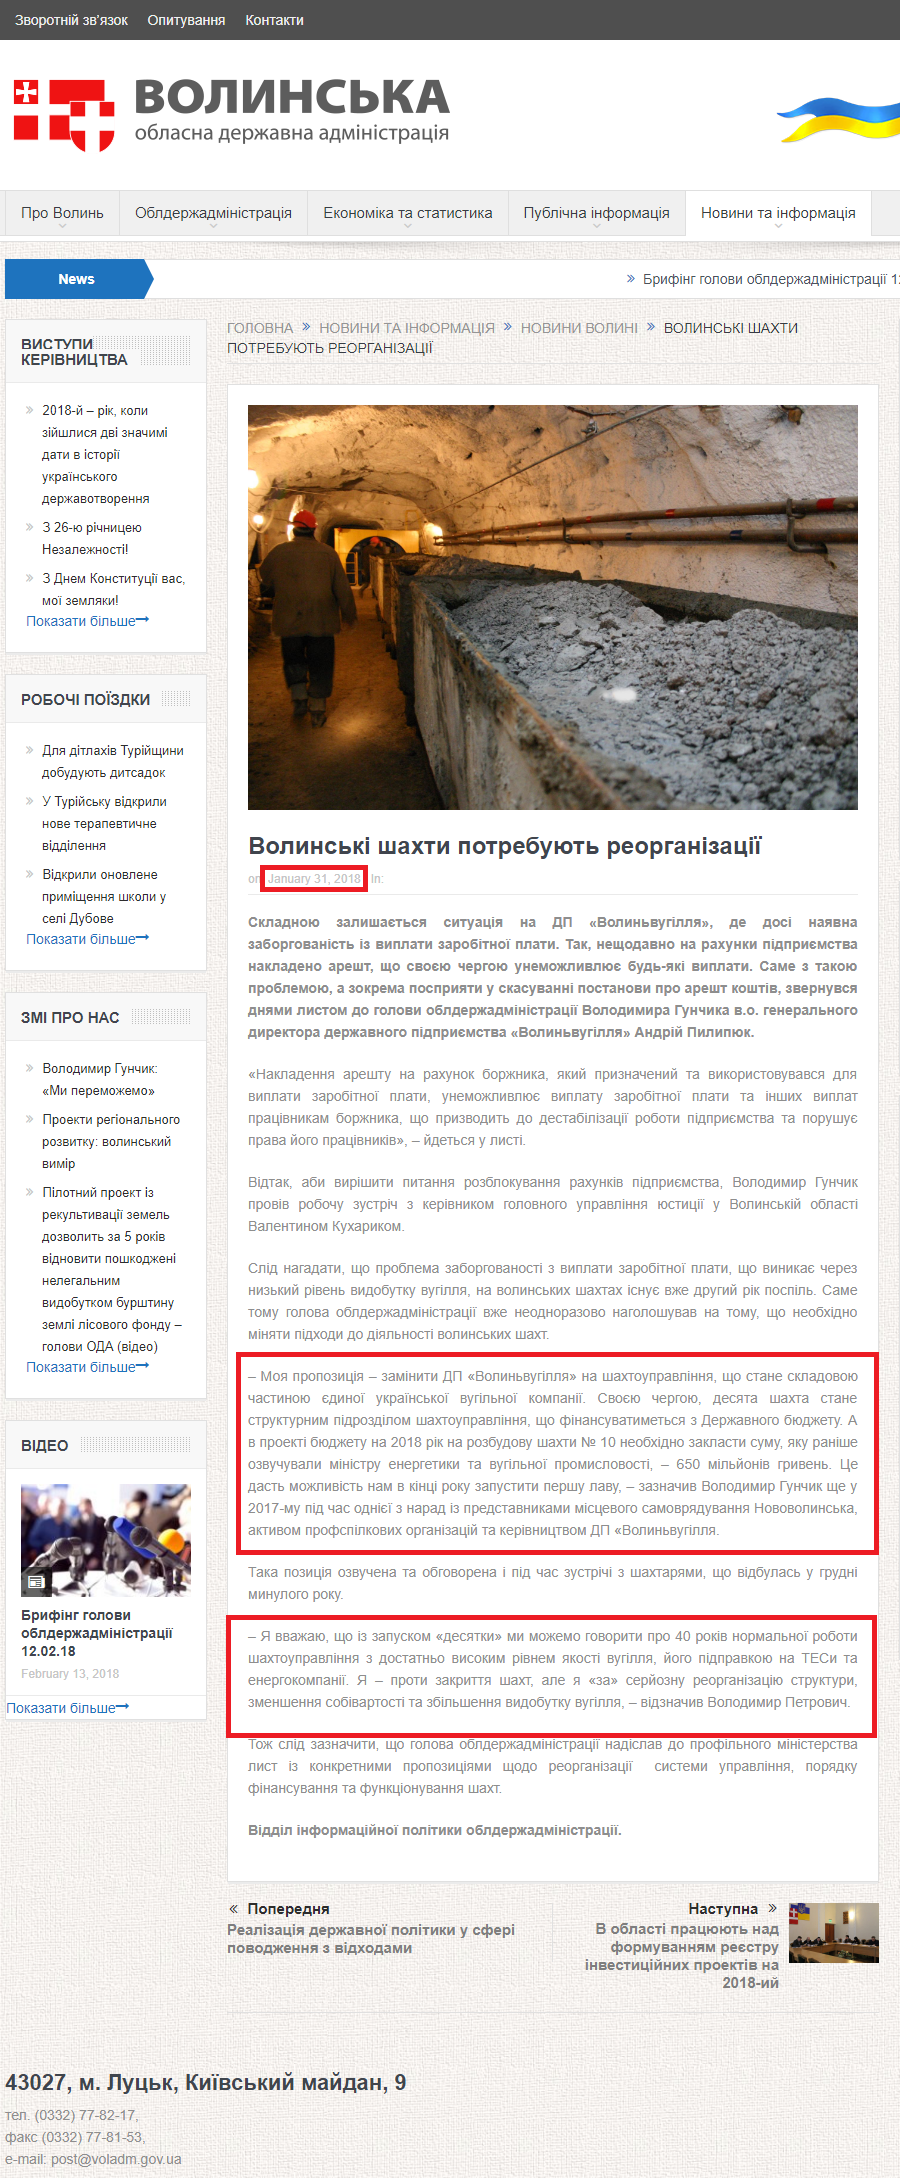 http://voladm.gov.ua/volinski-shaxti-potrebuyut-reorganizaci%D1%97/